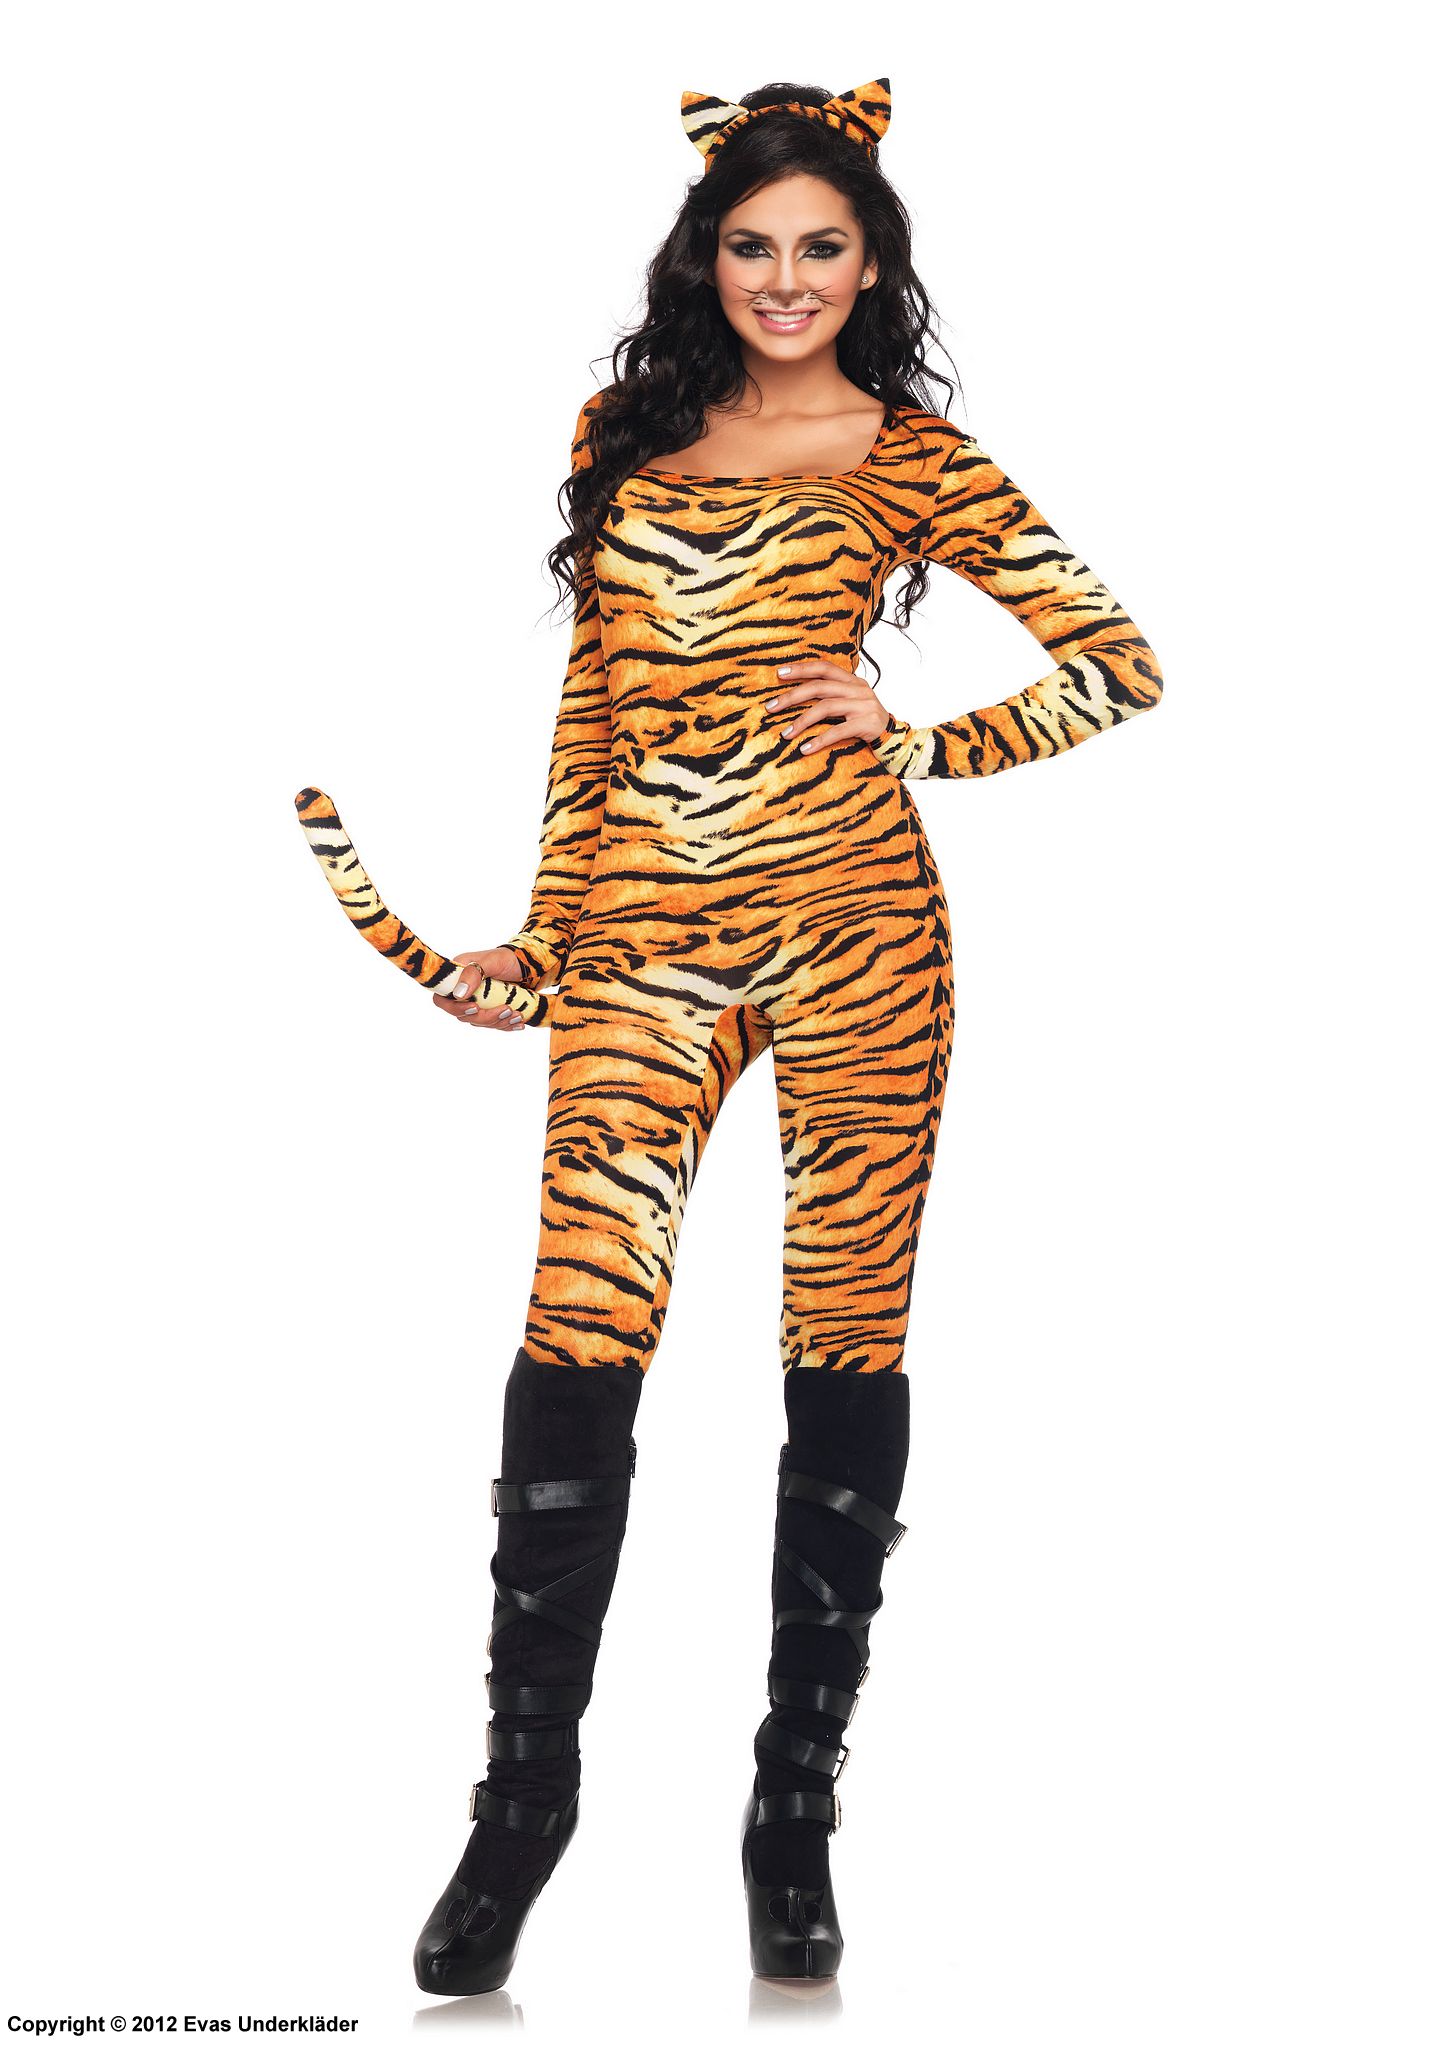 Tigresse, body costume, long sleeves, tail, animal print